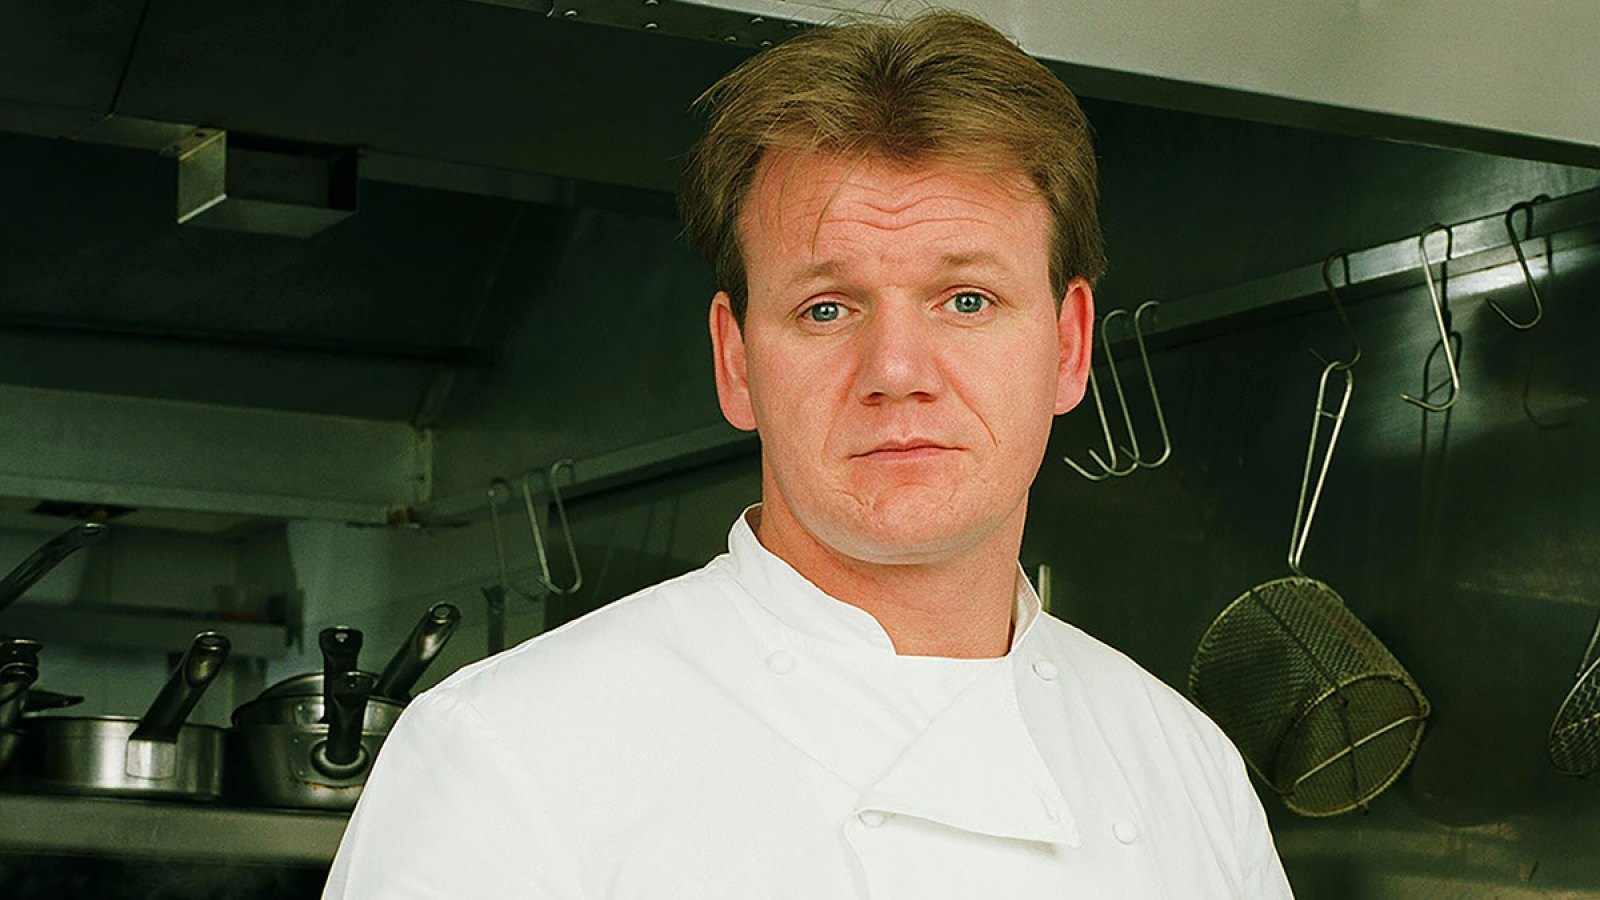 Second Gordon Ramsay Chef Commits Suicide